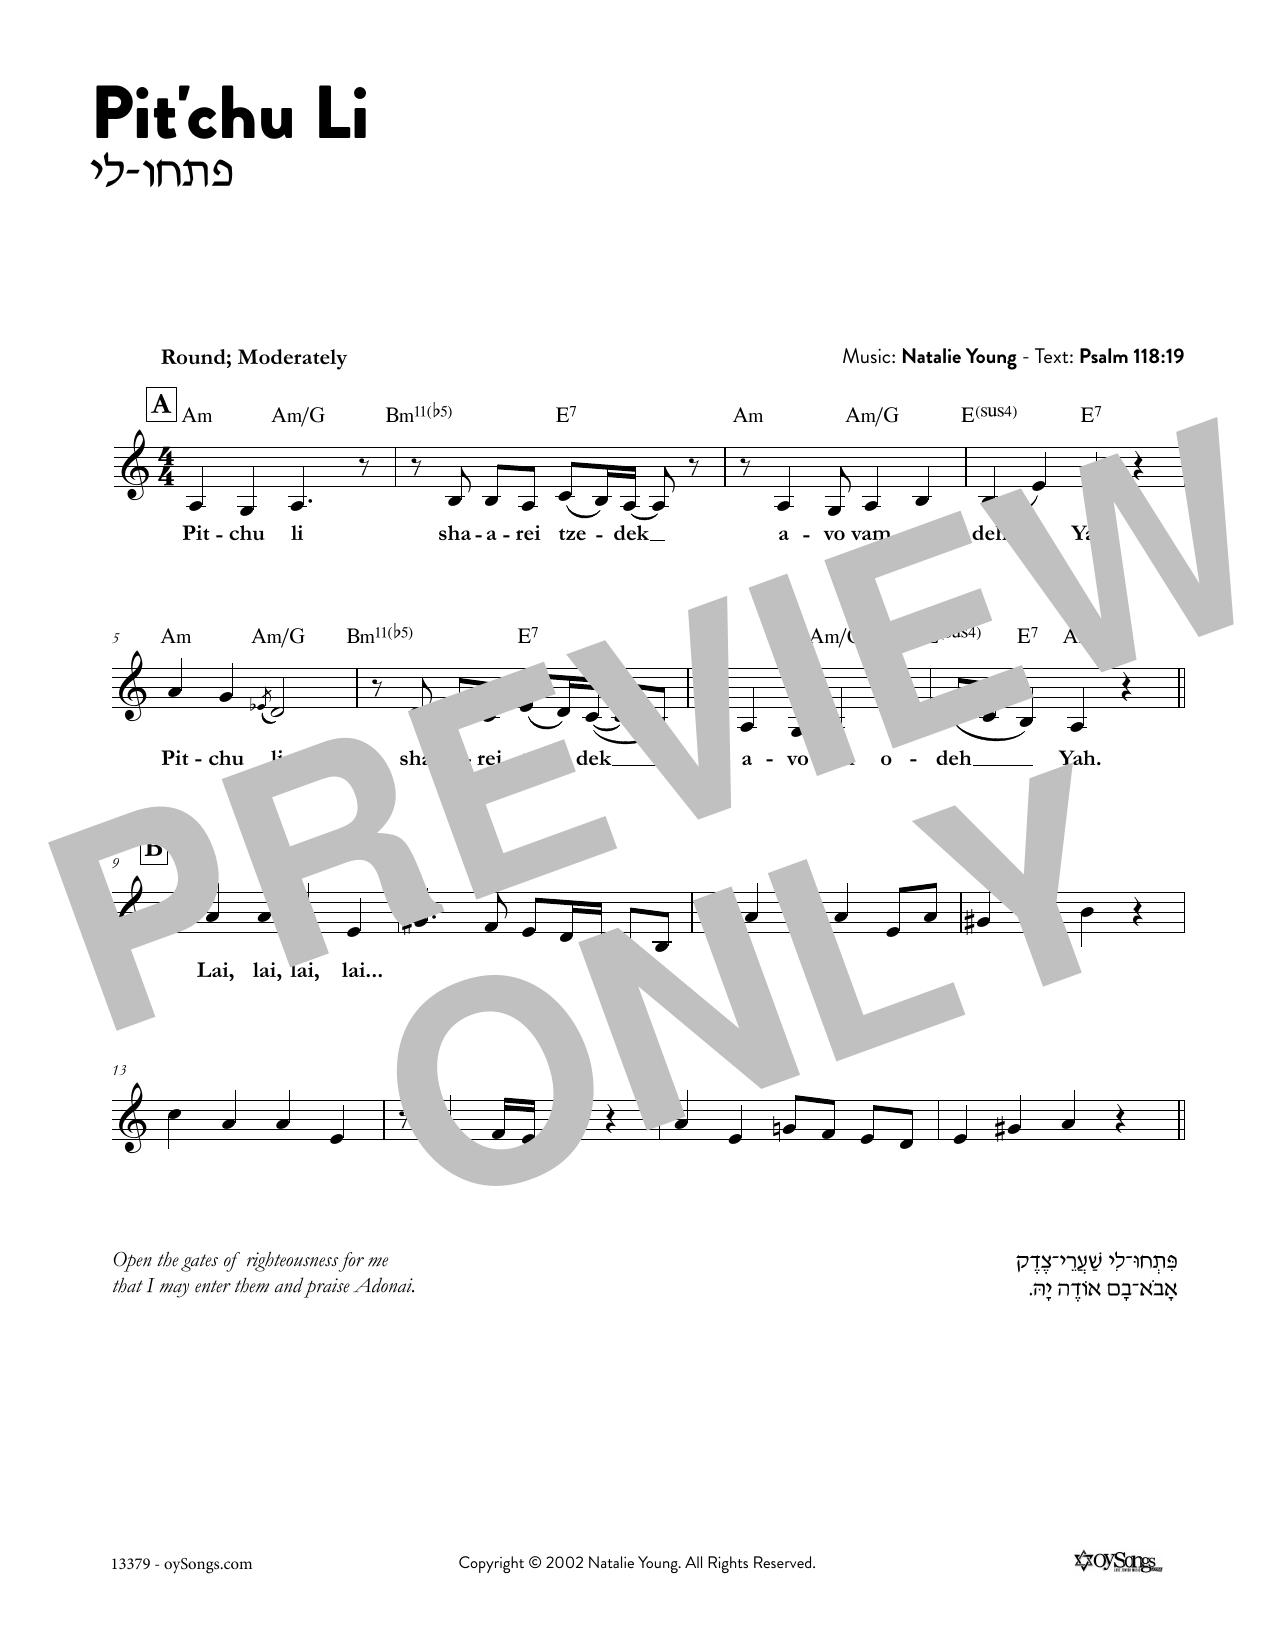 Natalie Young Pitchu Li Sheet Music Notes & Chords for Melody Line, Lyrics & Chords - Download or Print PDF